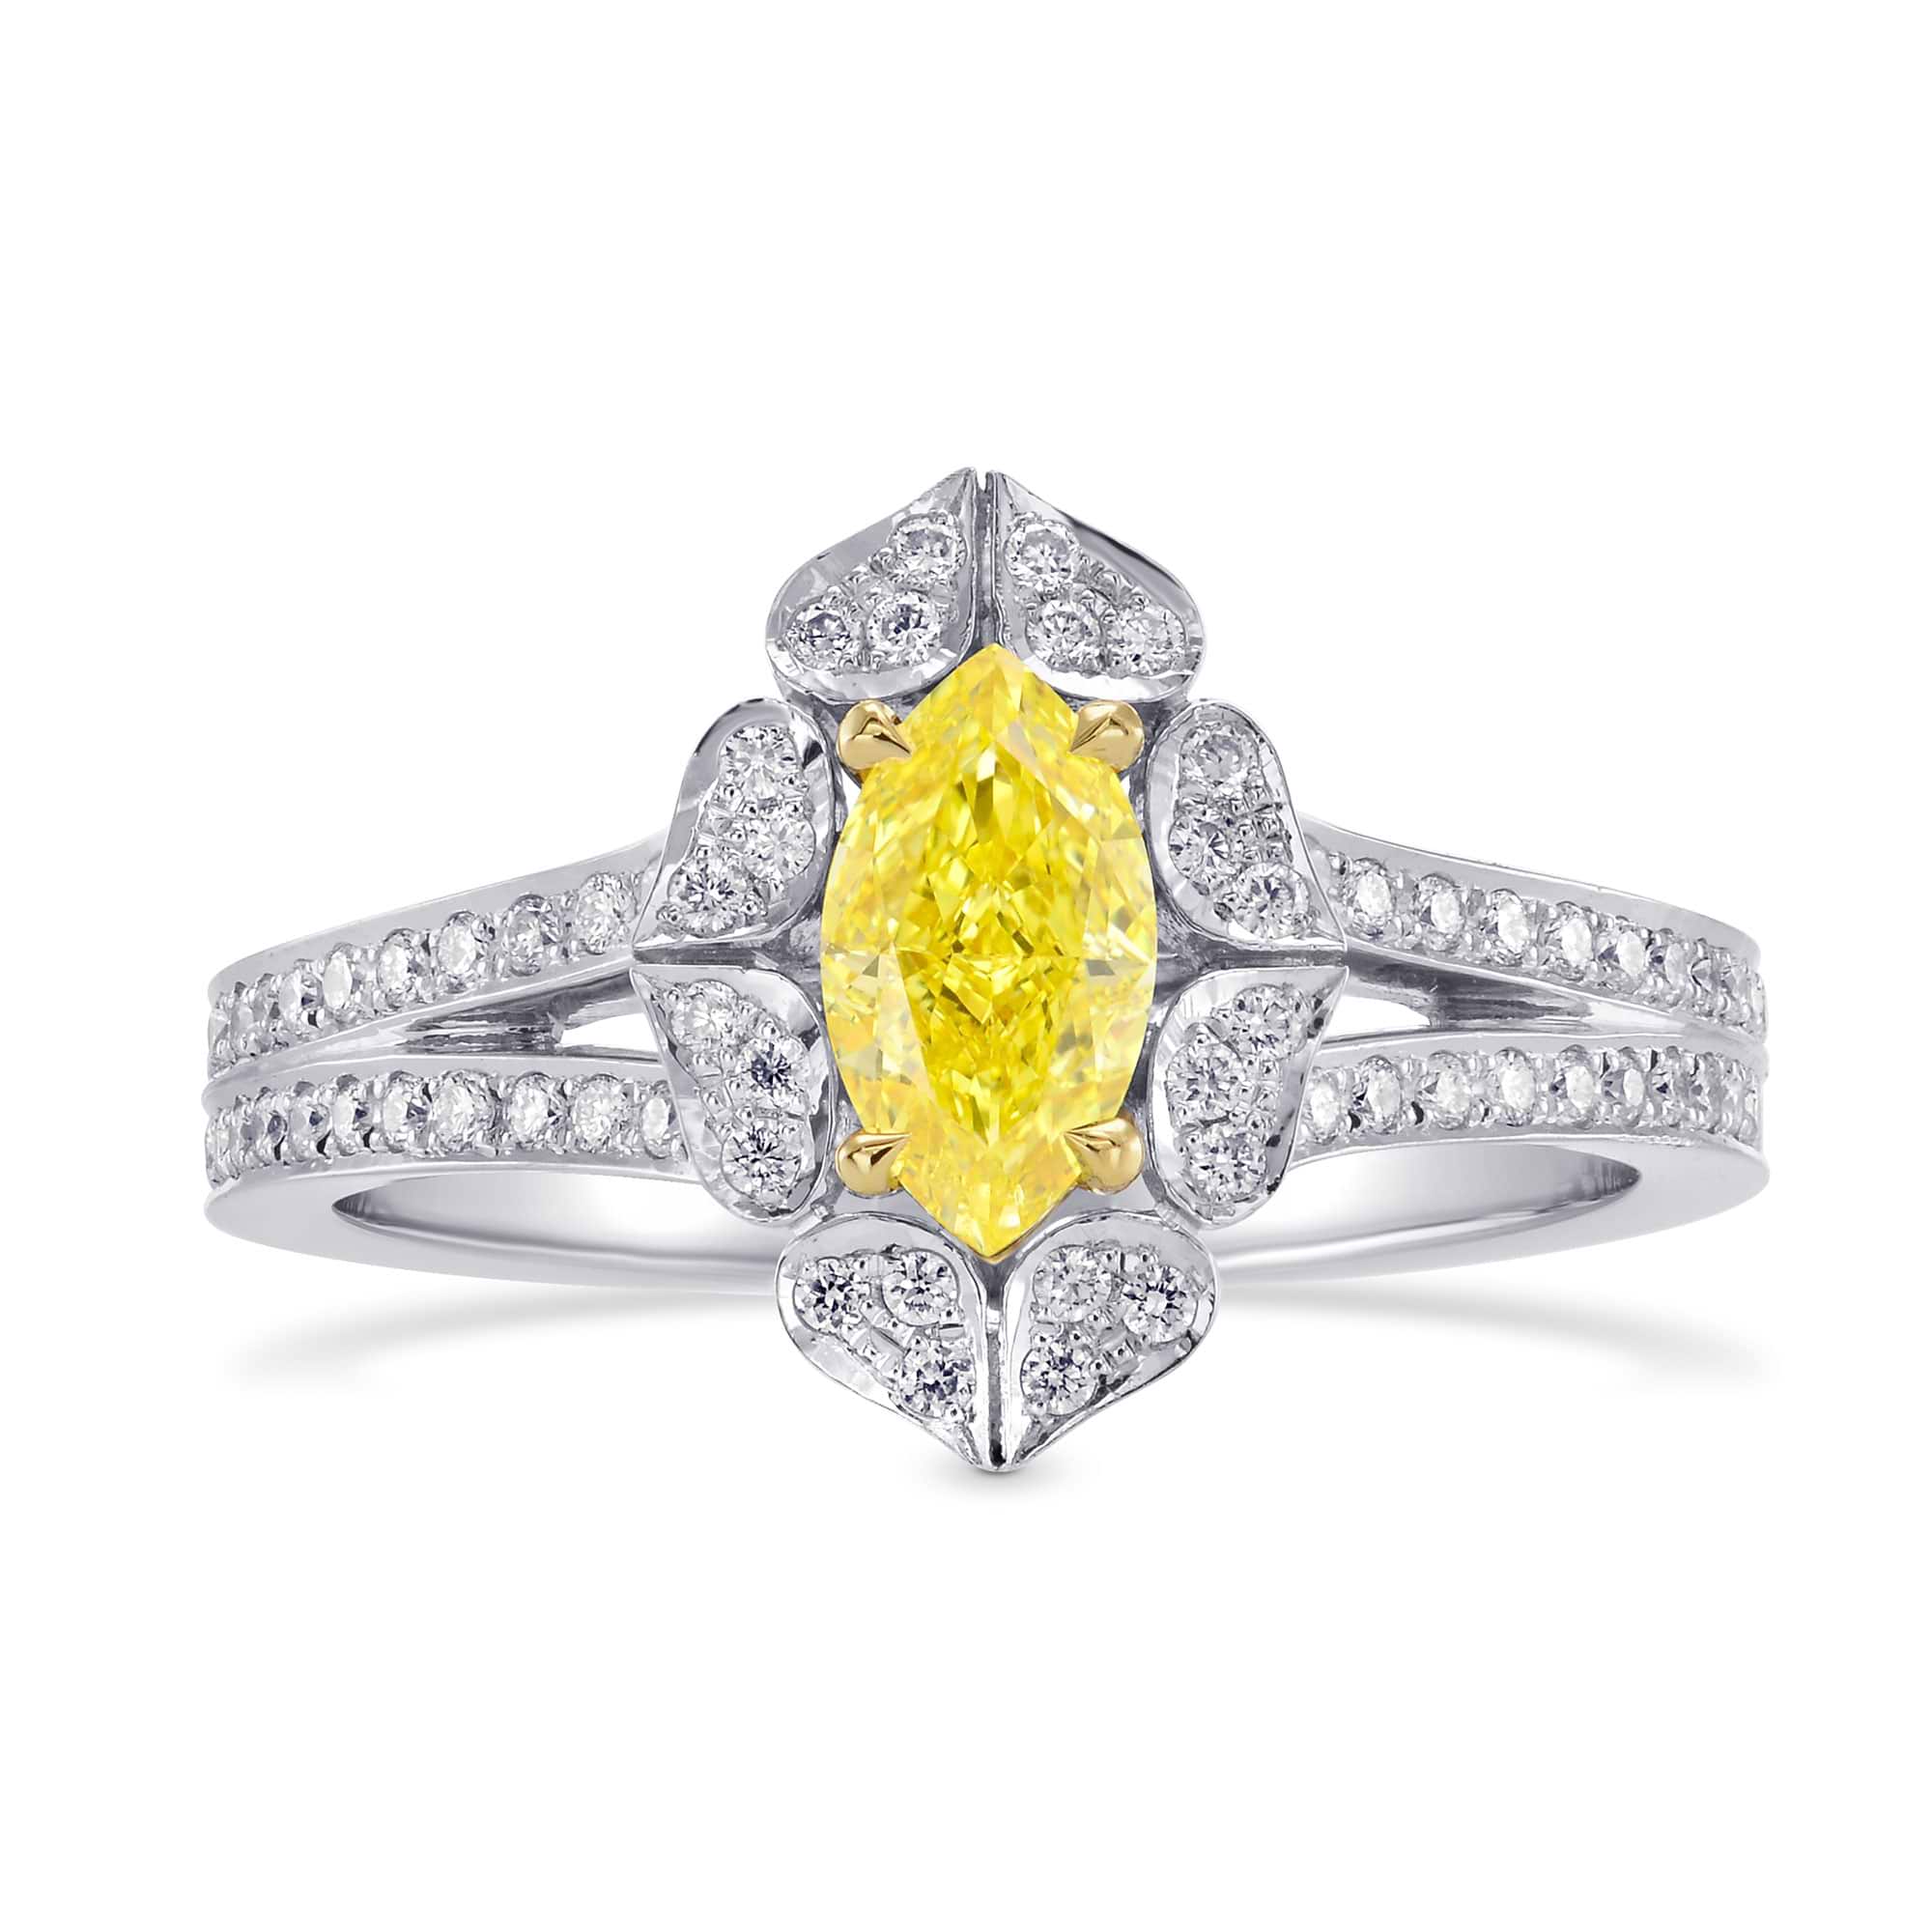 Fancy Intense Yellow Diamond Dress Ring (0.86Ct TW)